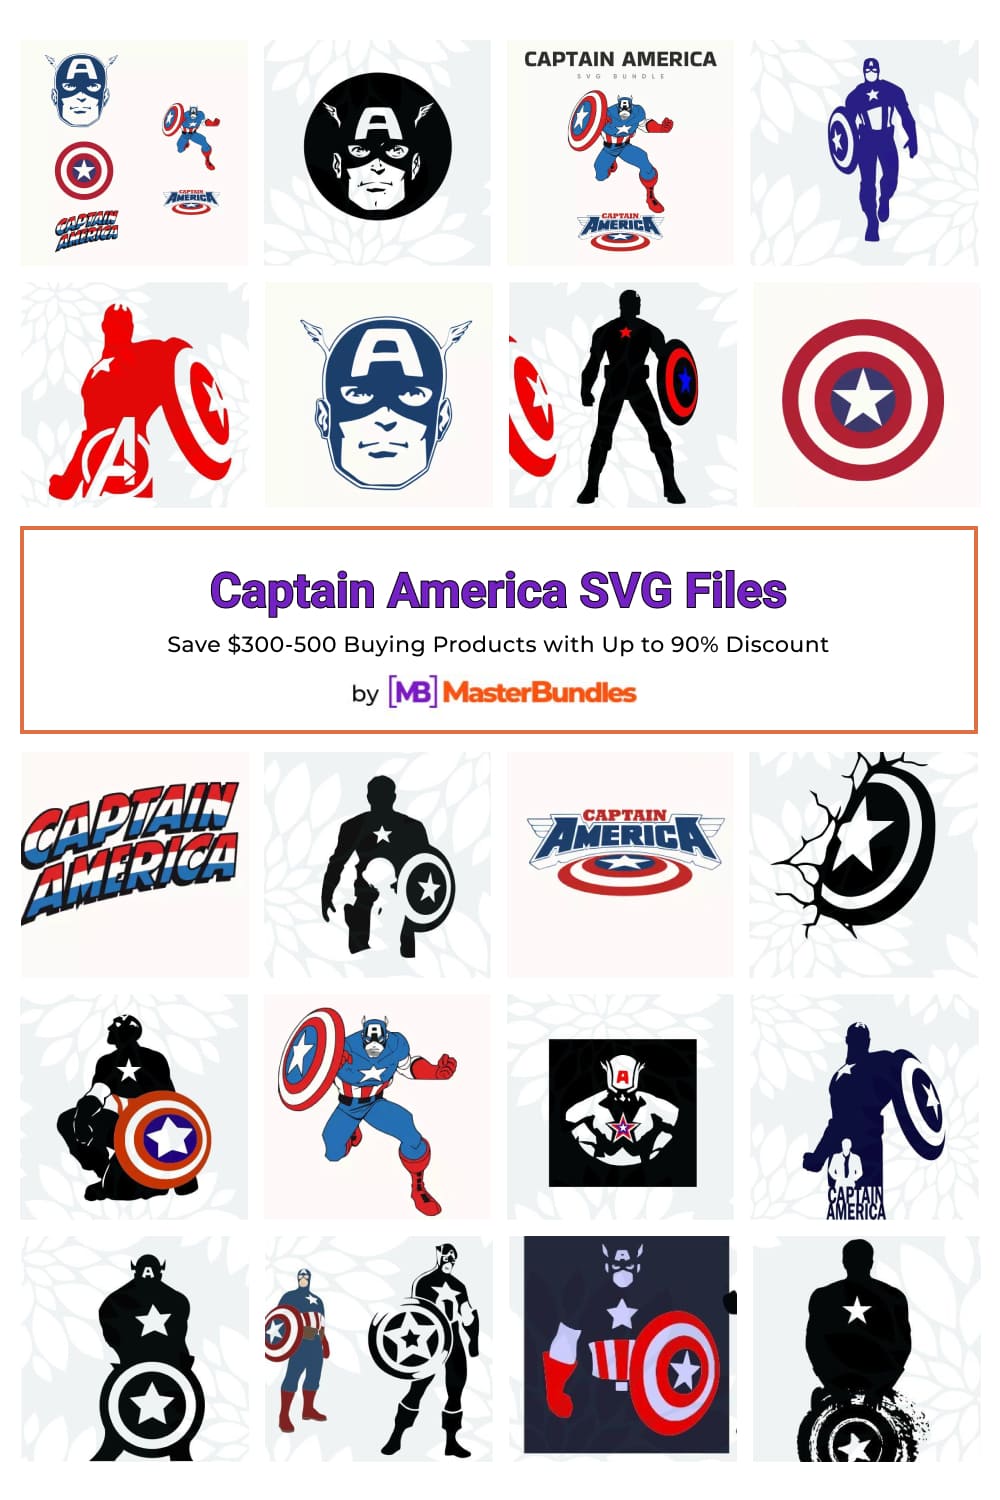 Captain America SVG Files Pinterest image.